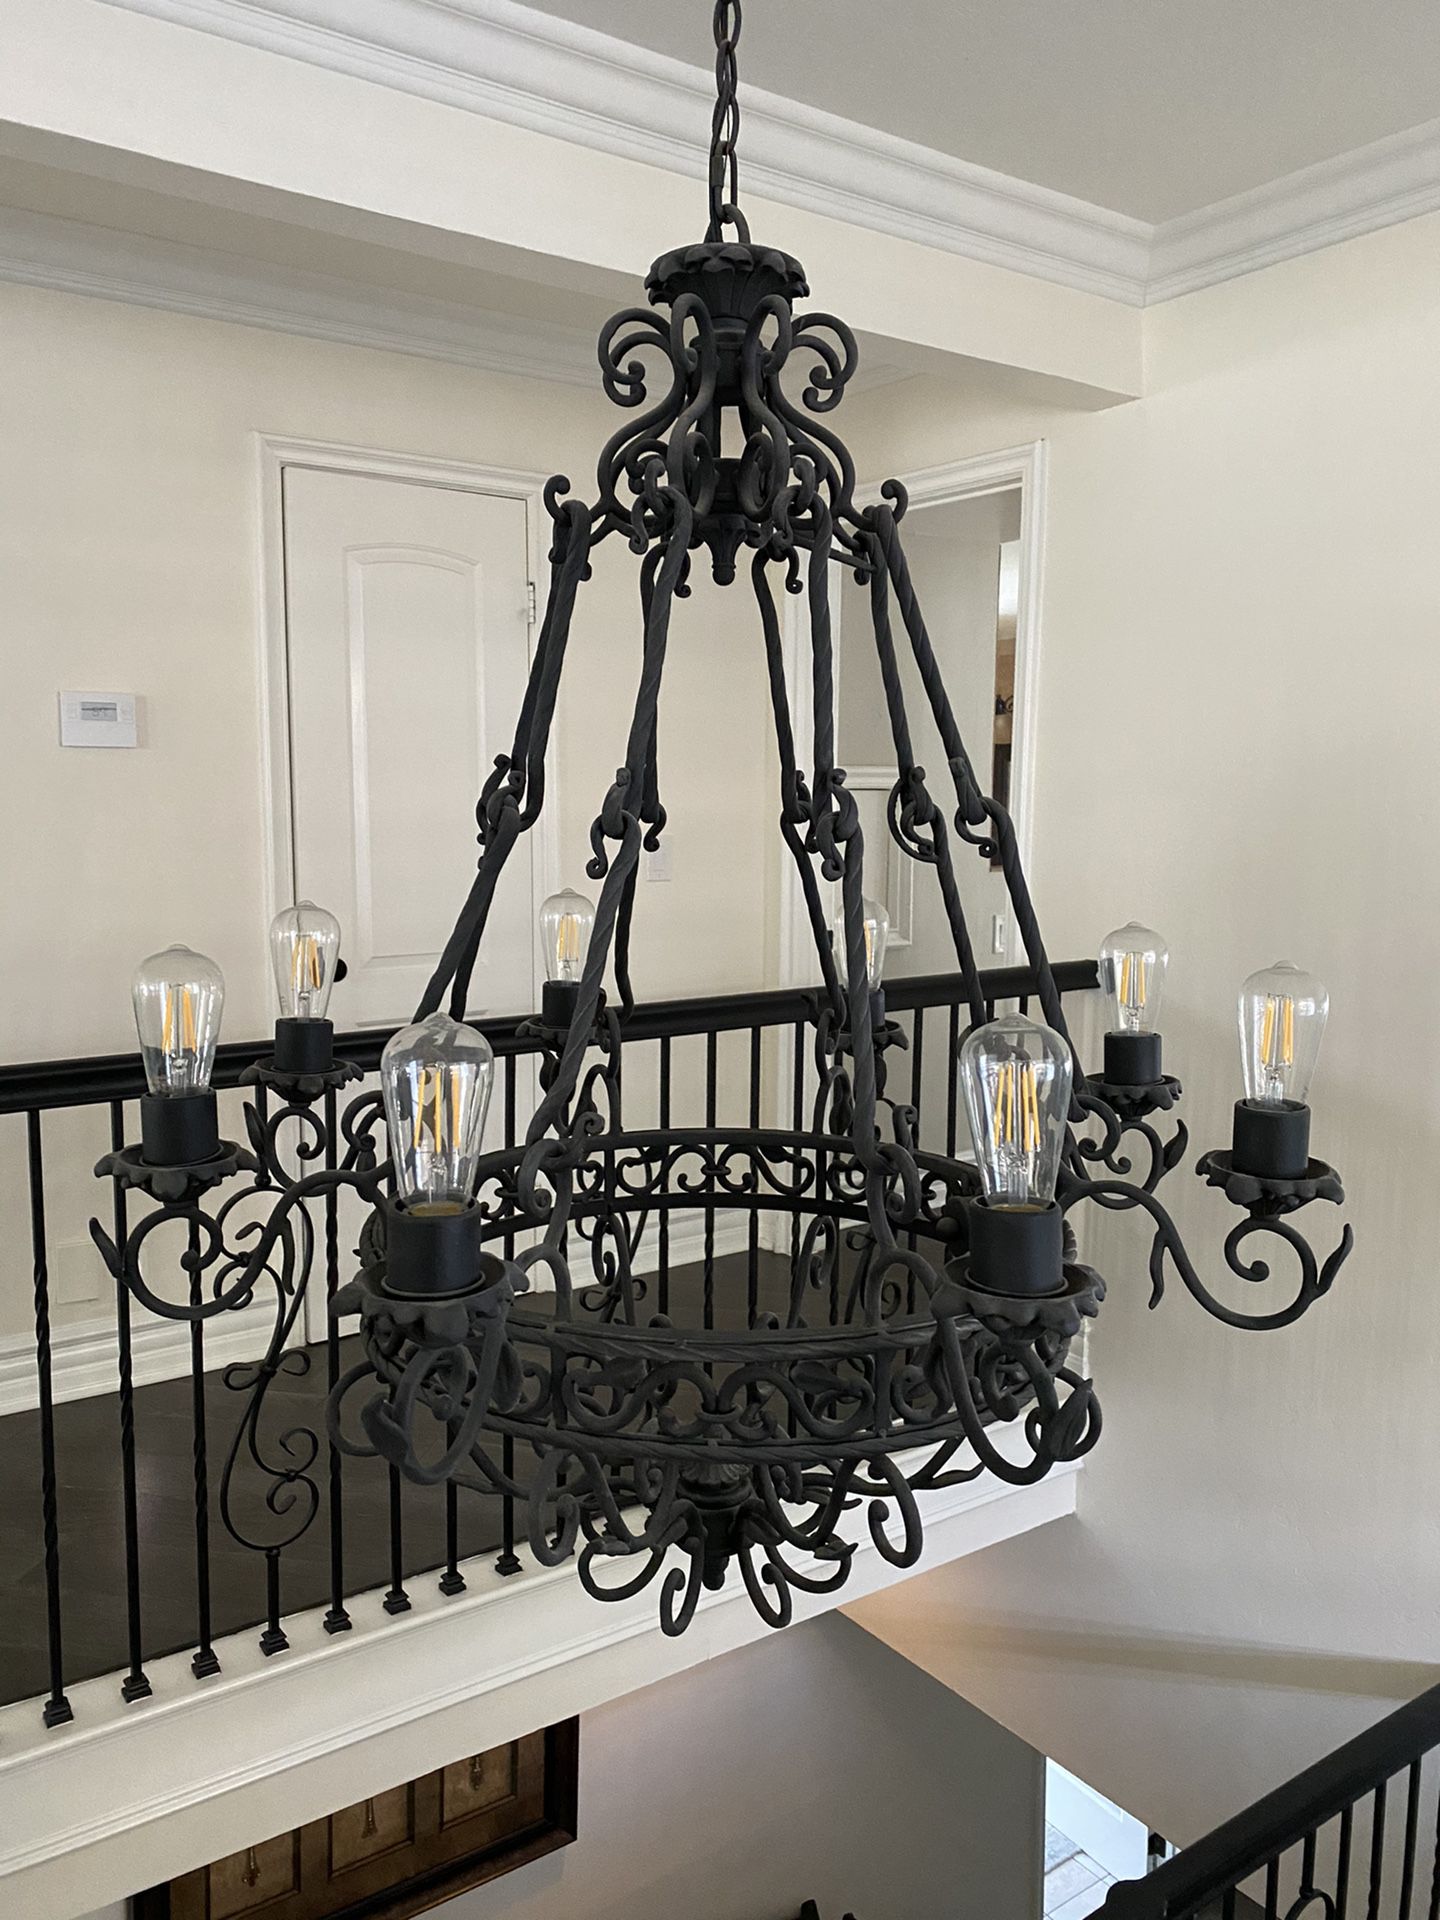 8 light Iron chandelier